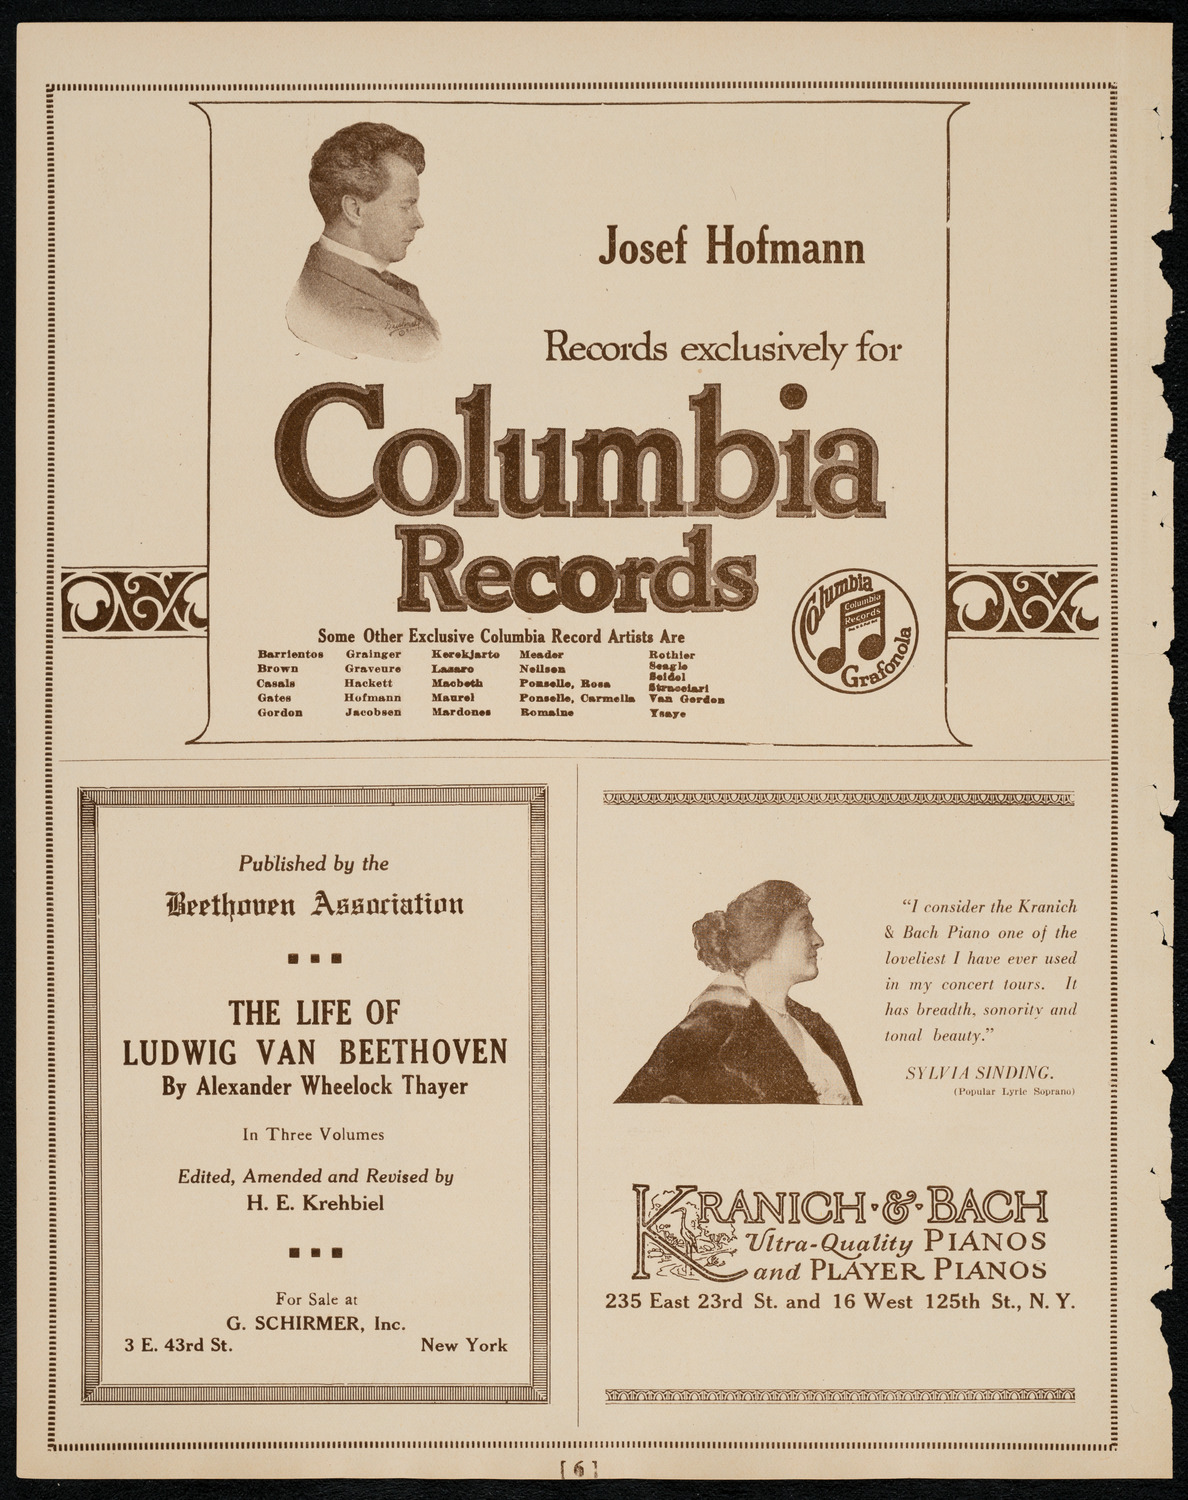 Burton Holmes Travelogue: Mexico, January 8, 1922, program page 6